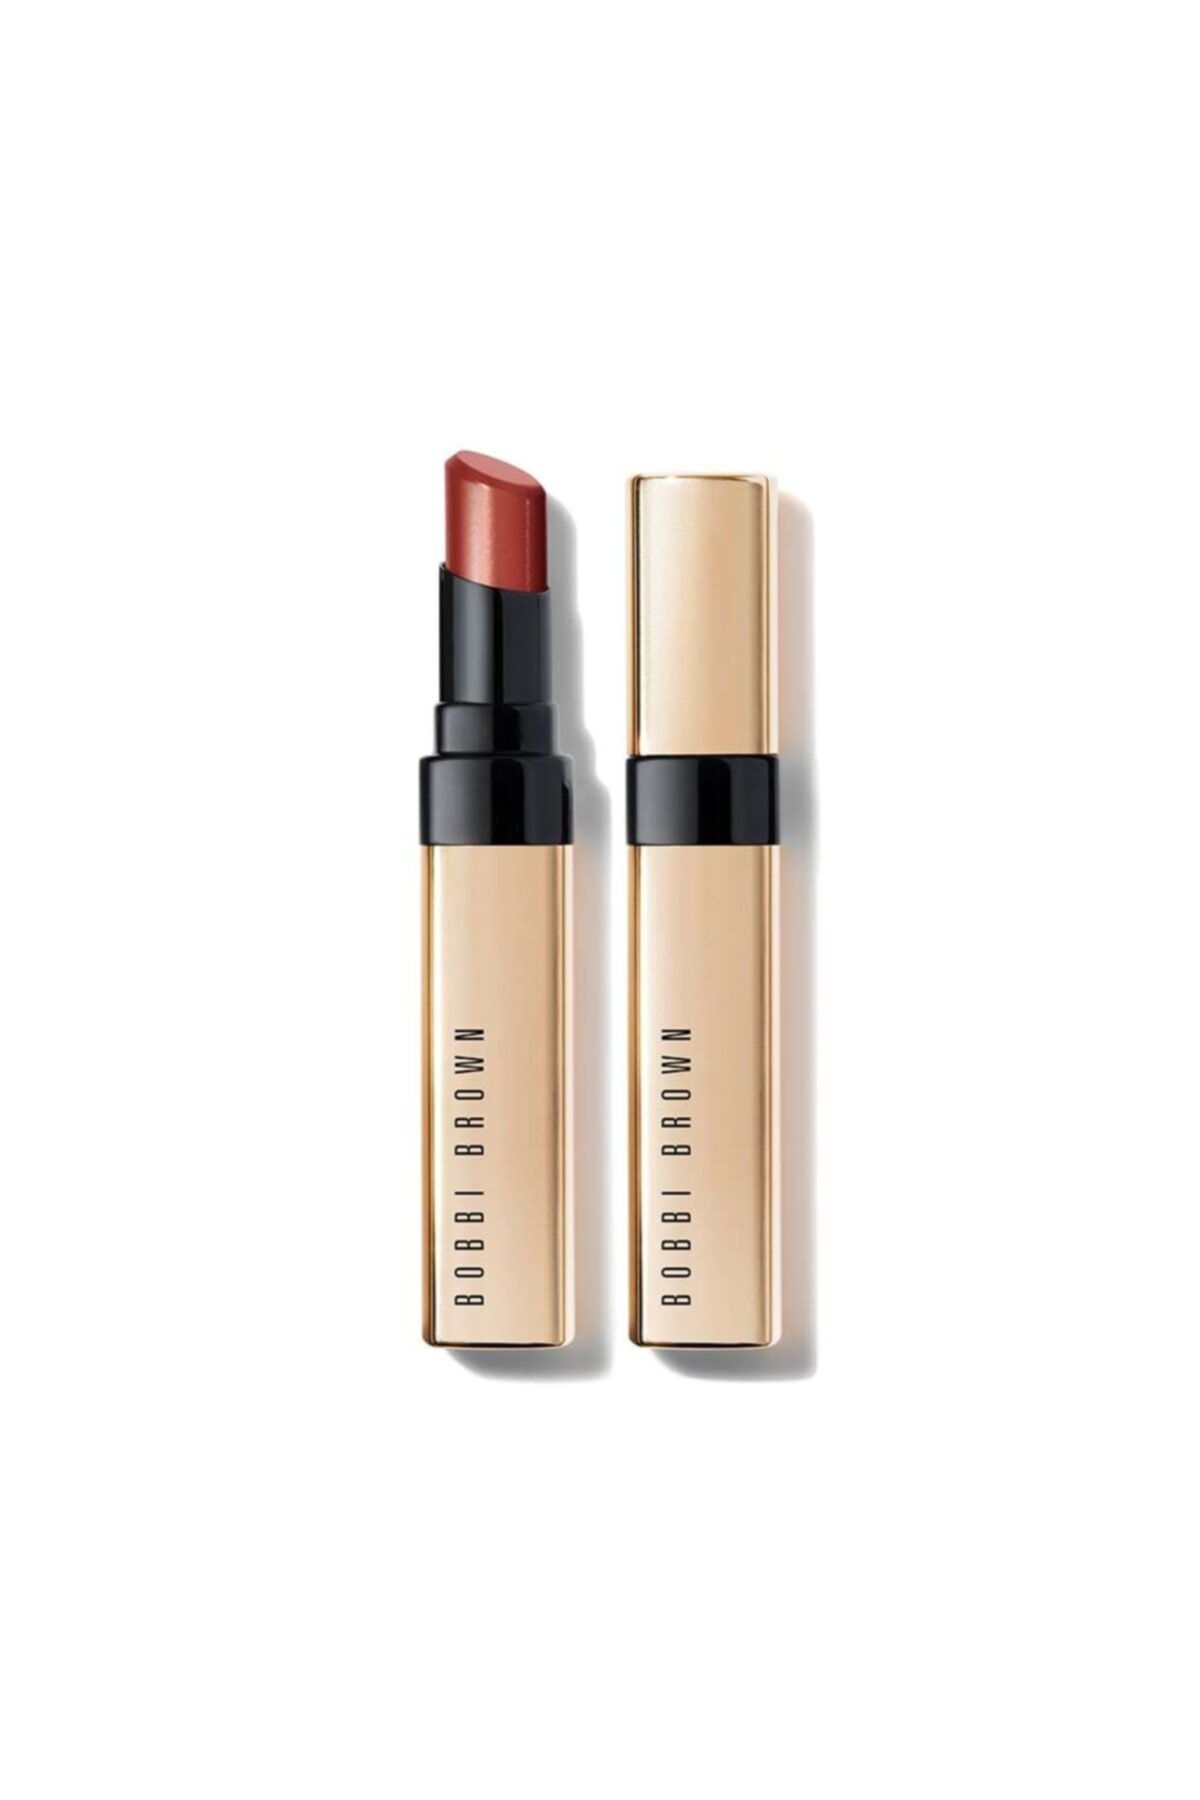 Bobbi Brown Luxe Shine Intense Lipstick / Ruj Fh19 2.3g Claret 716170225494